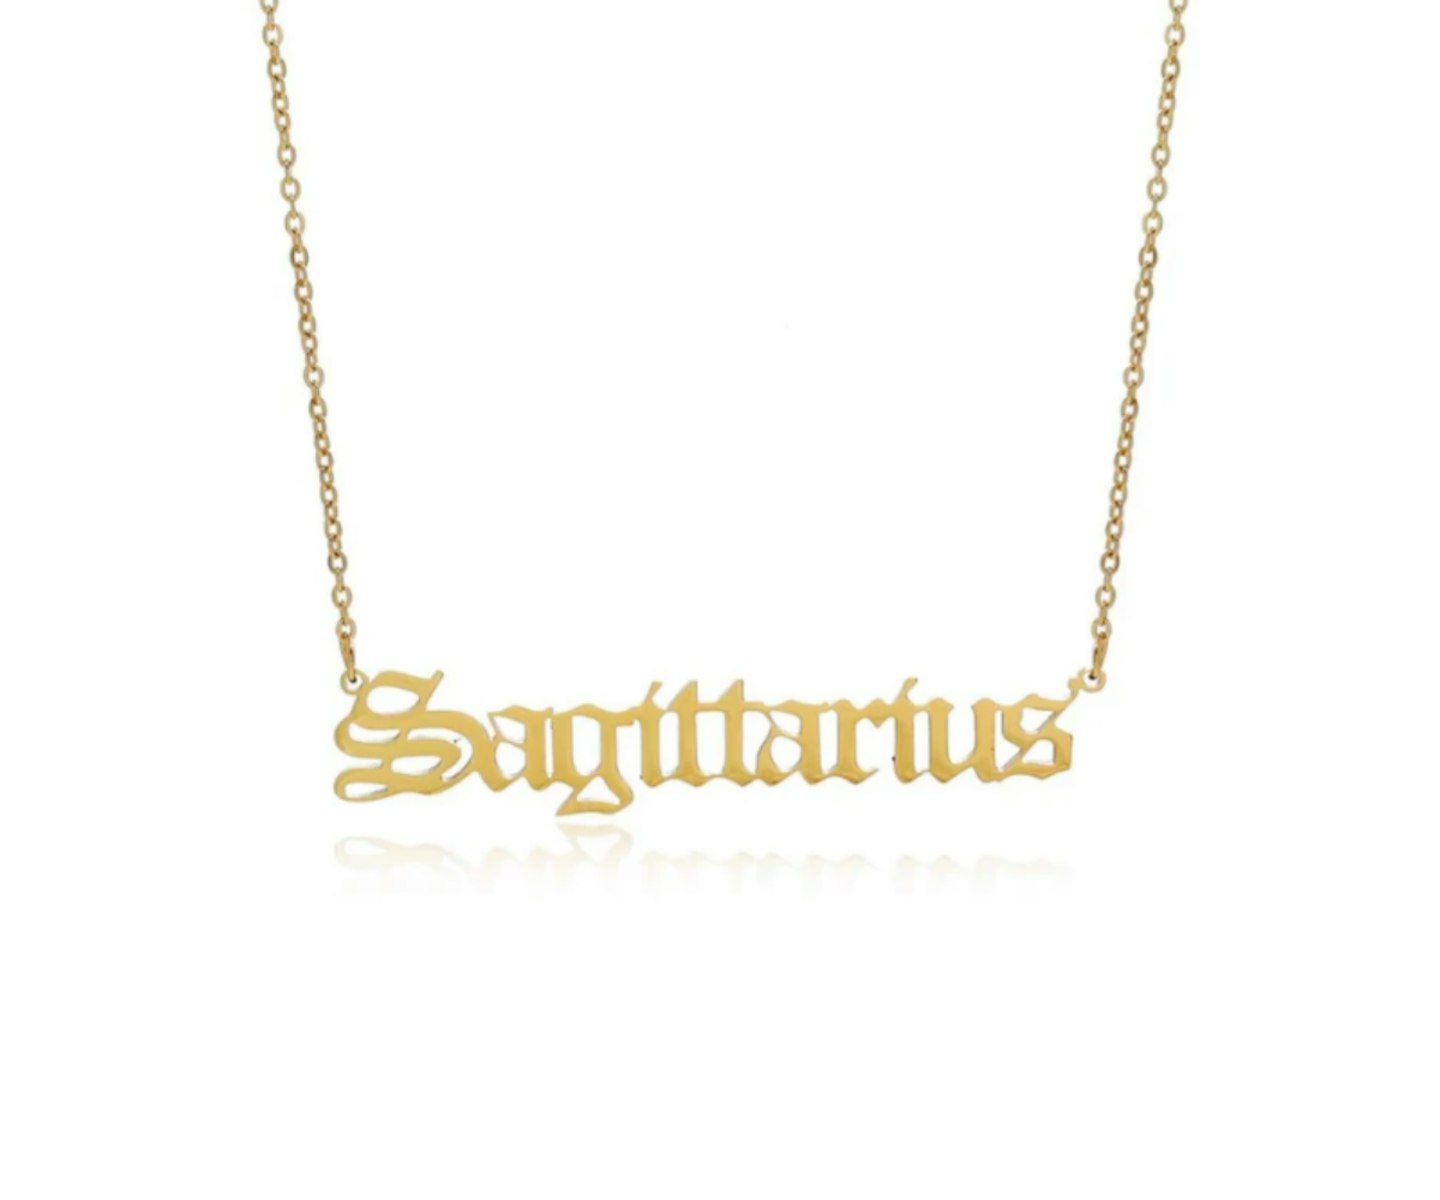 Sagittarius zodiac star sign necklace